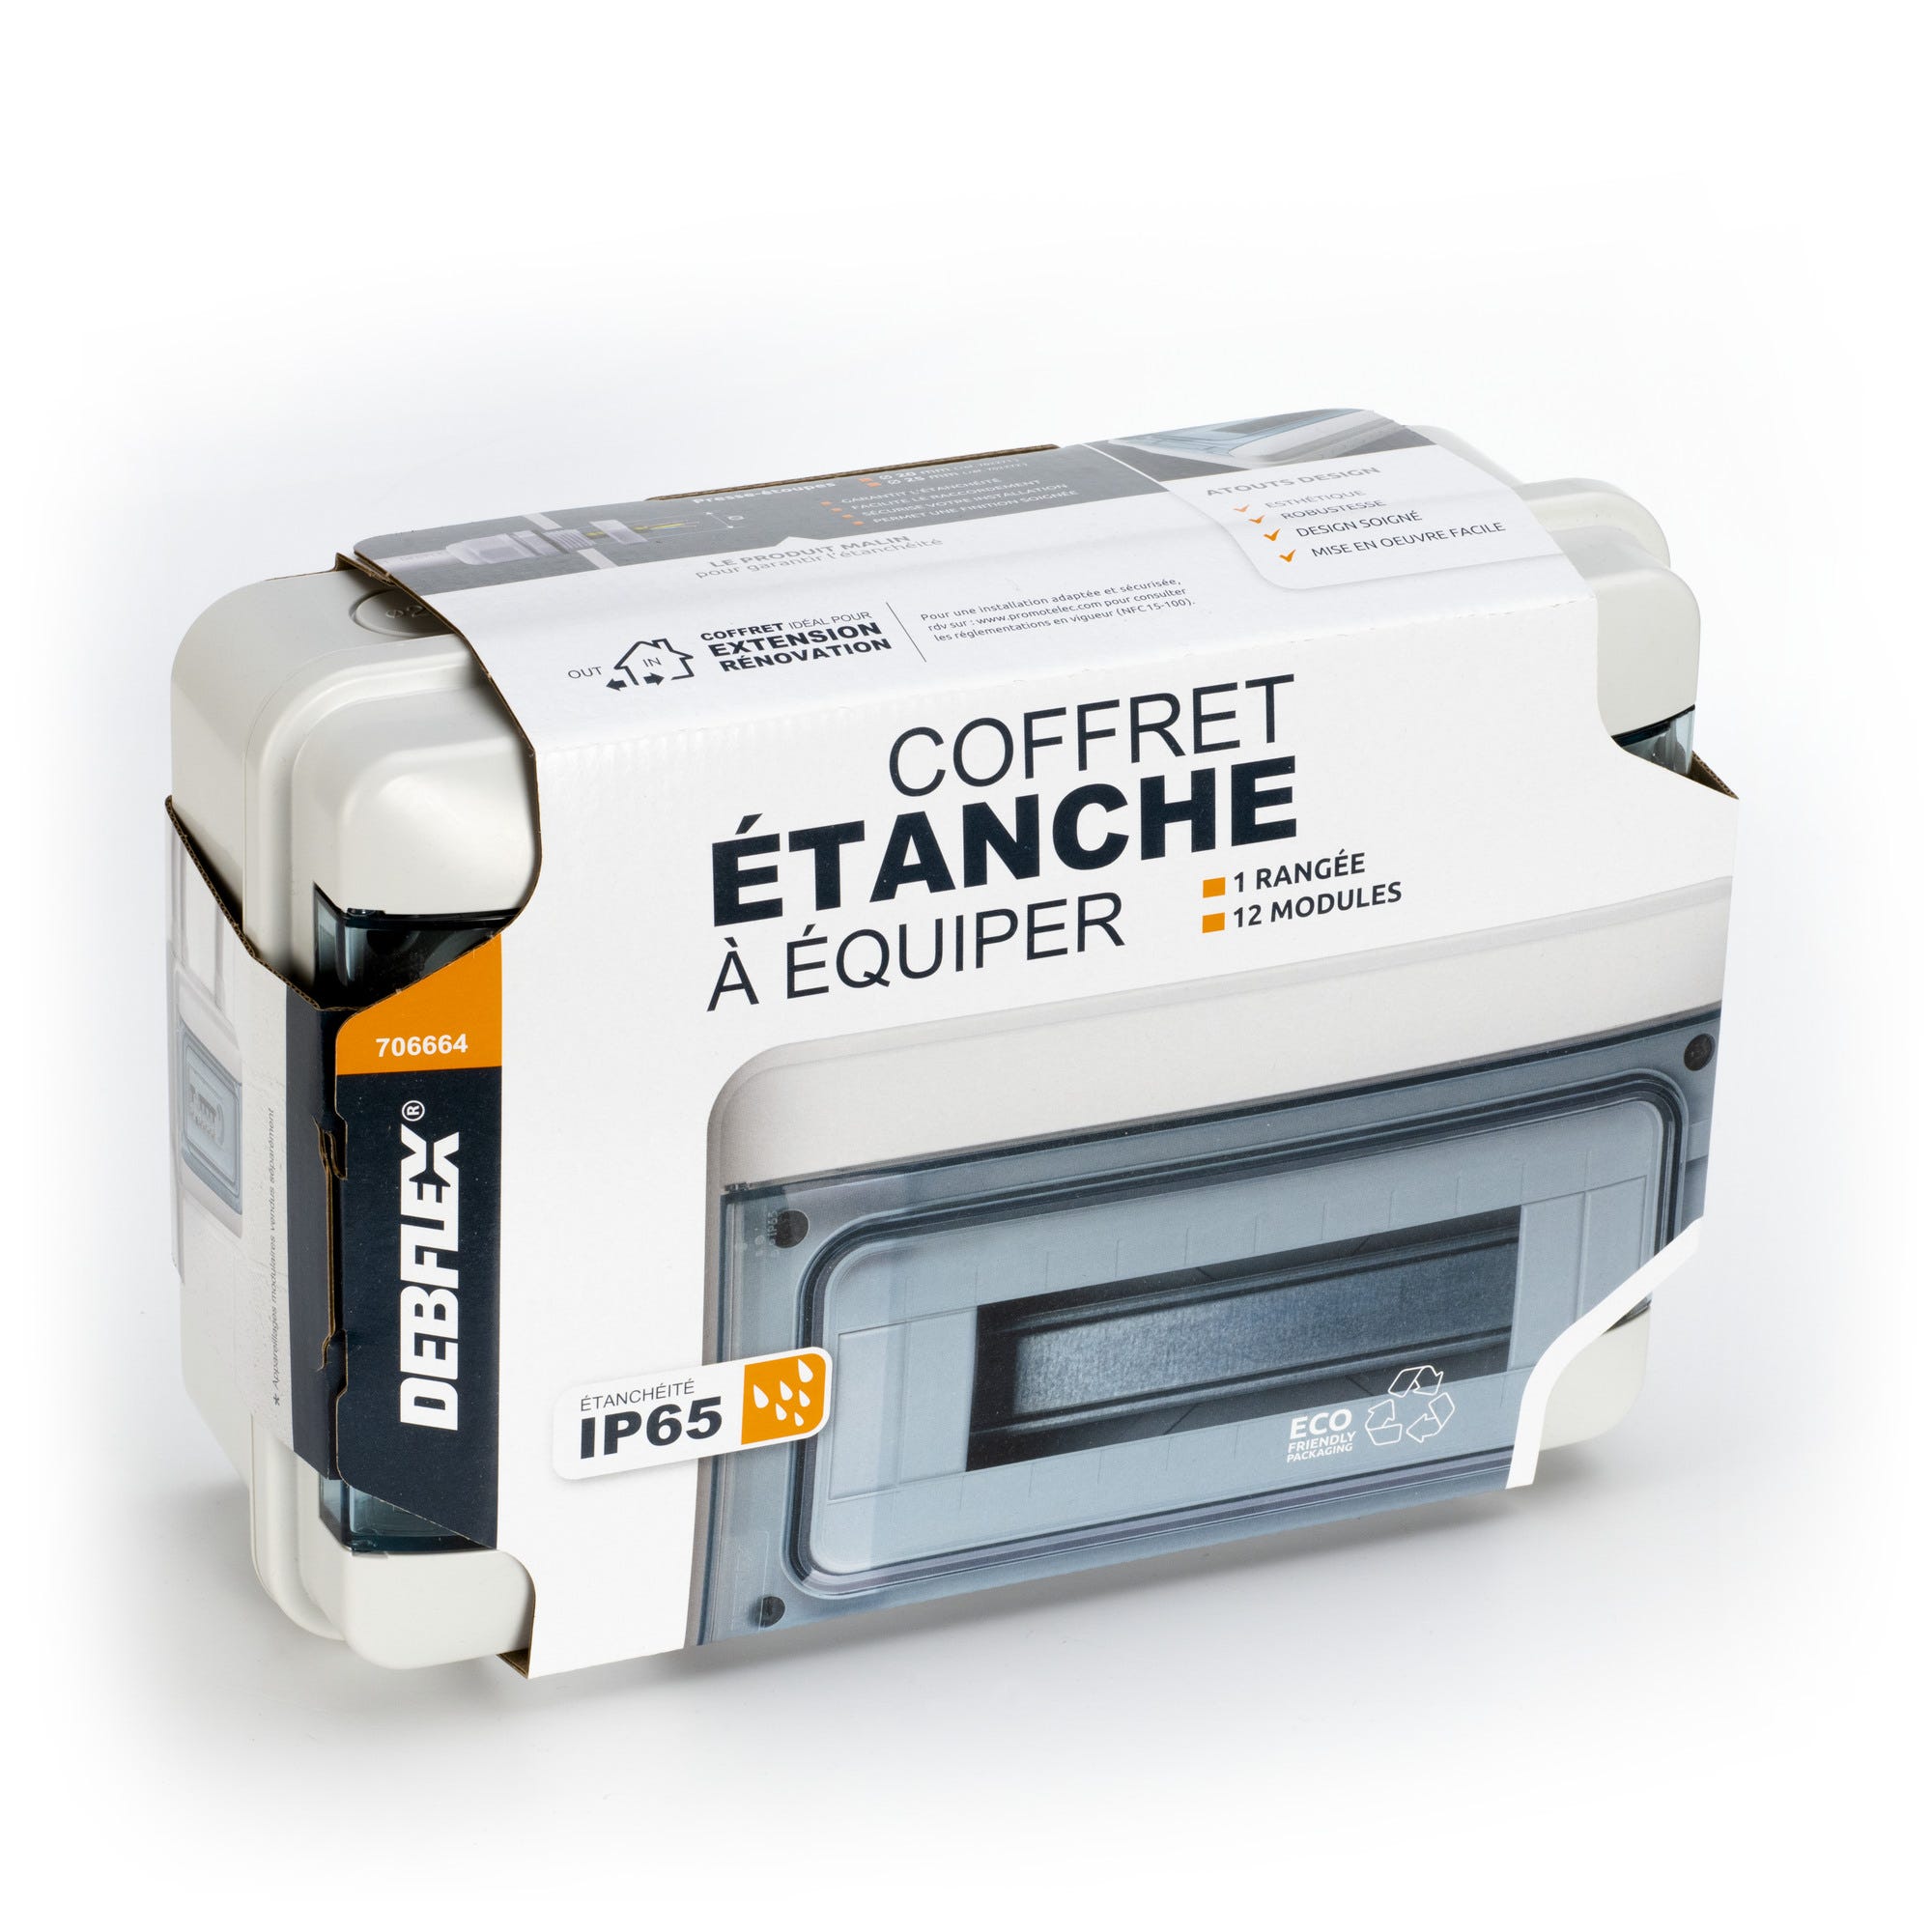 COFFRET ETANCHE IP65 12 MODULES 2